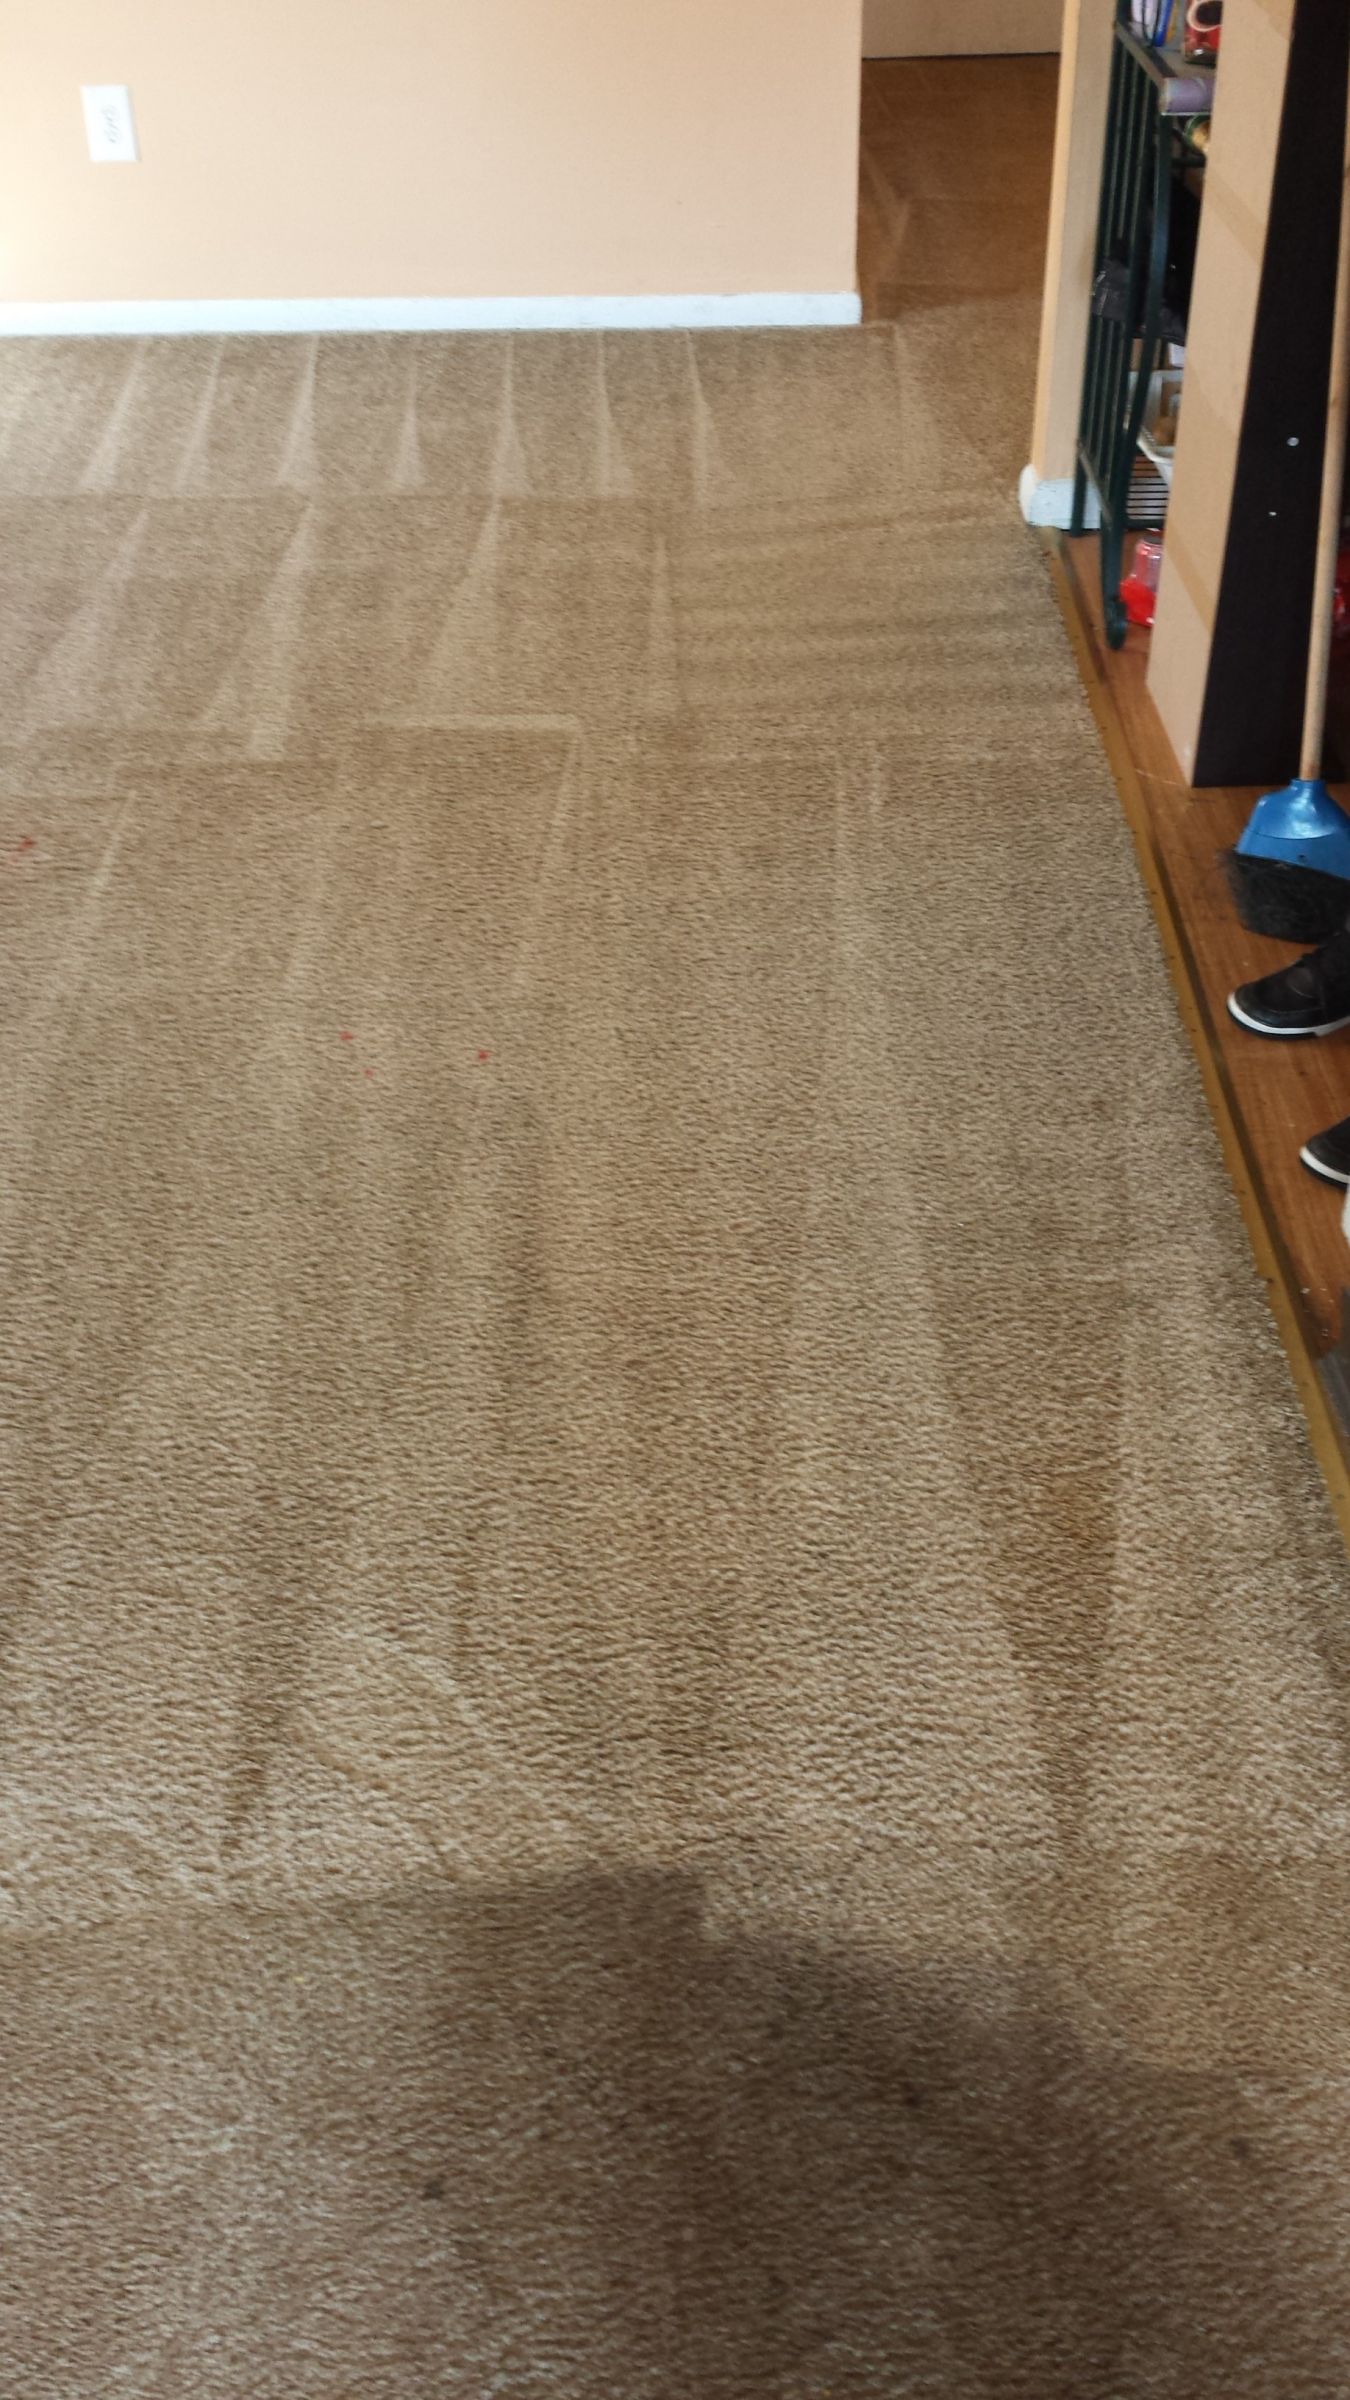 Marlton Voorhees Carpet Cleaning. Keep A Healthy Carpet